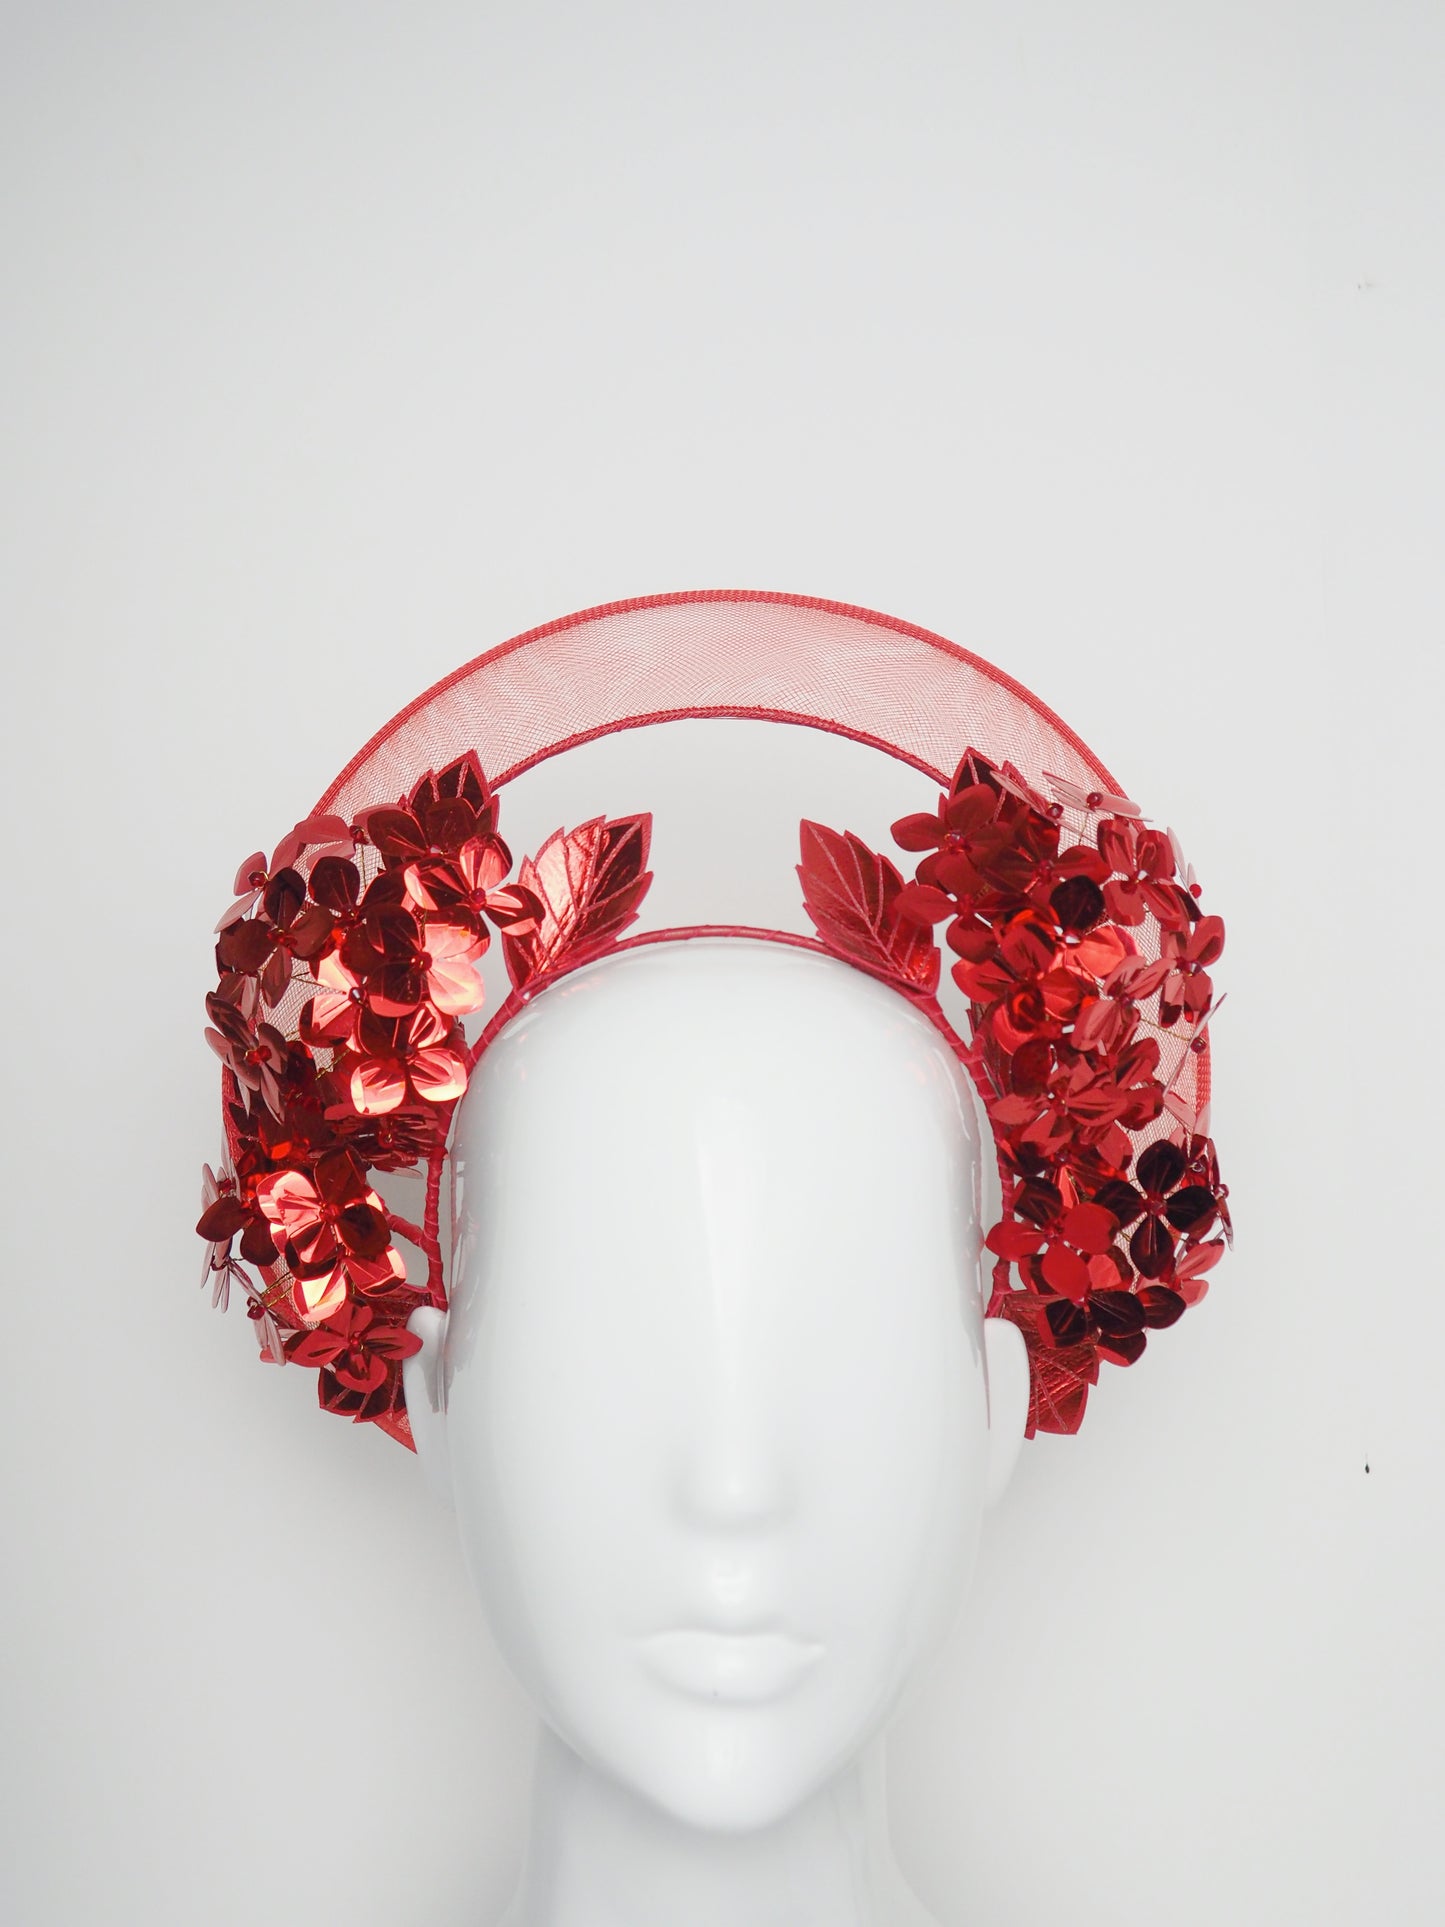 Red Glimmer - Red Hydrangea wired Halo headpiece